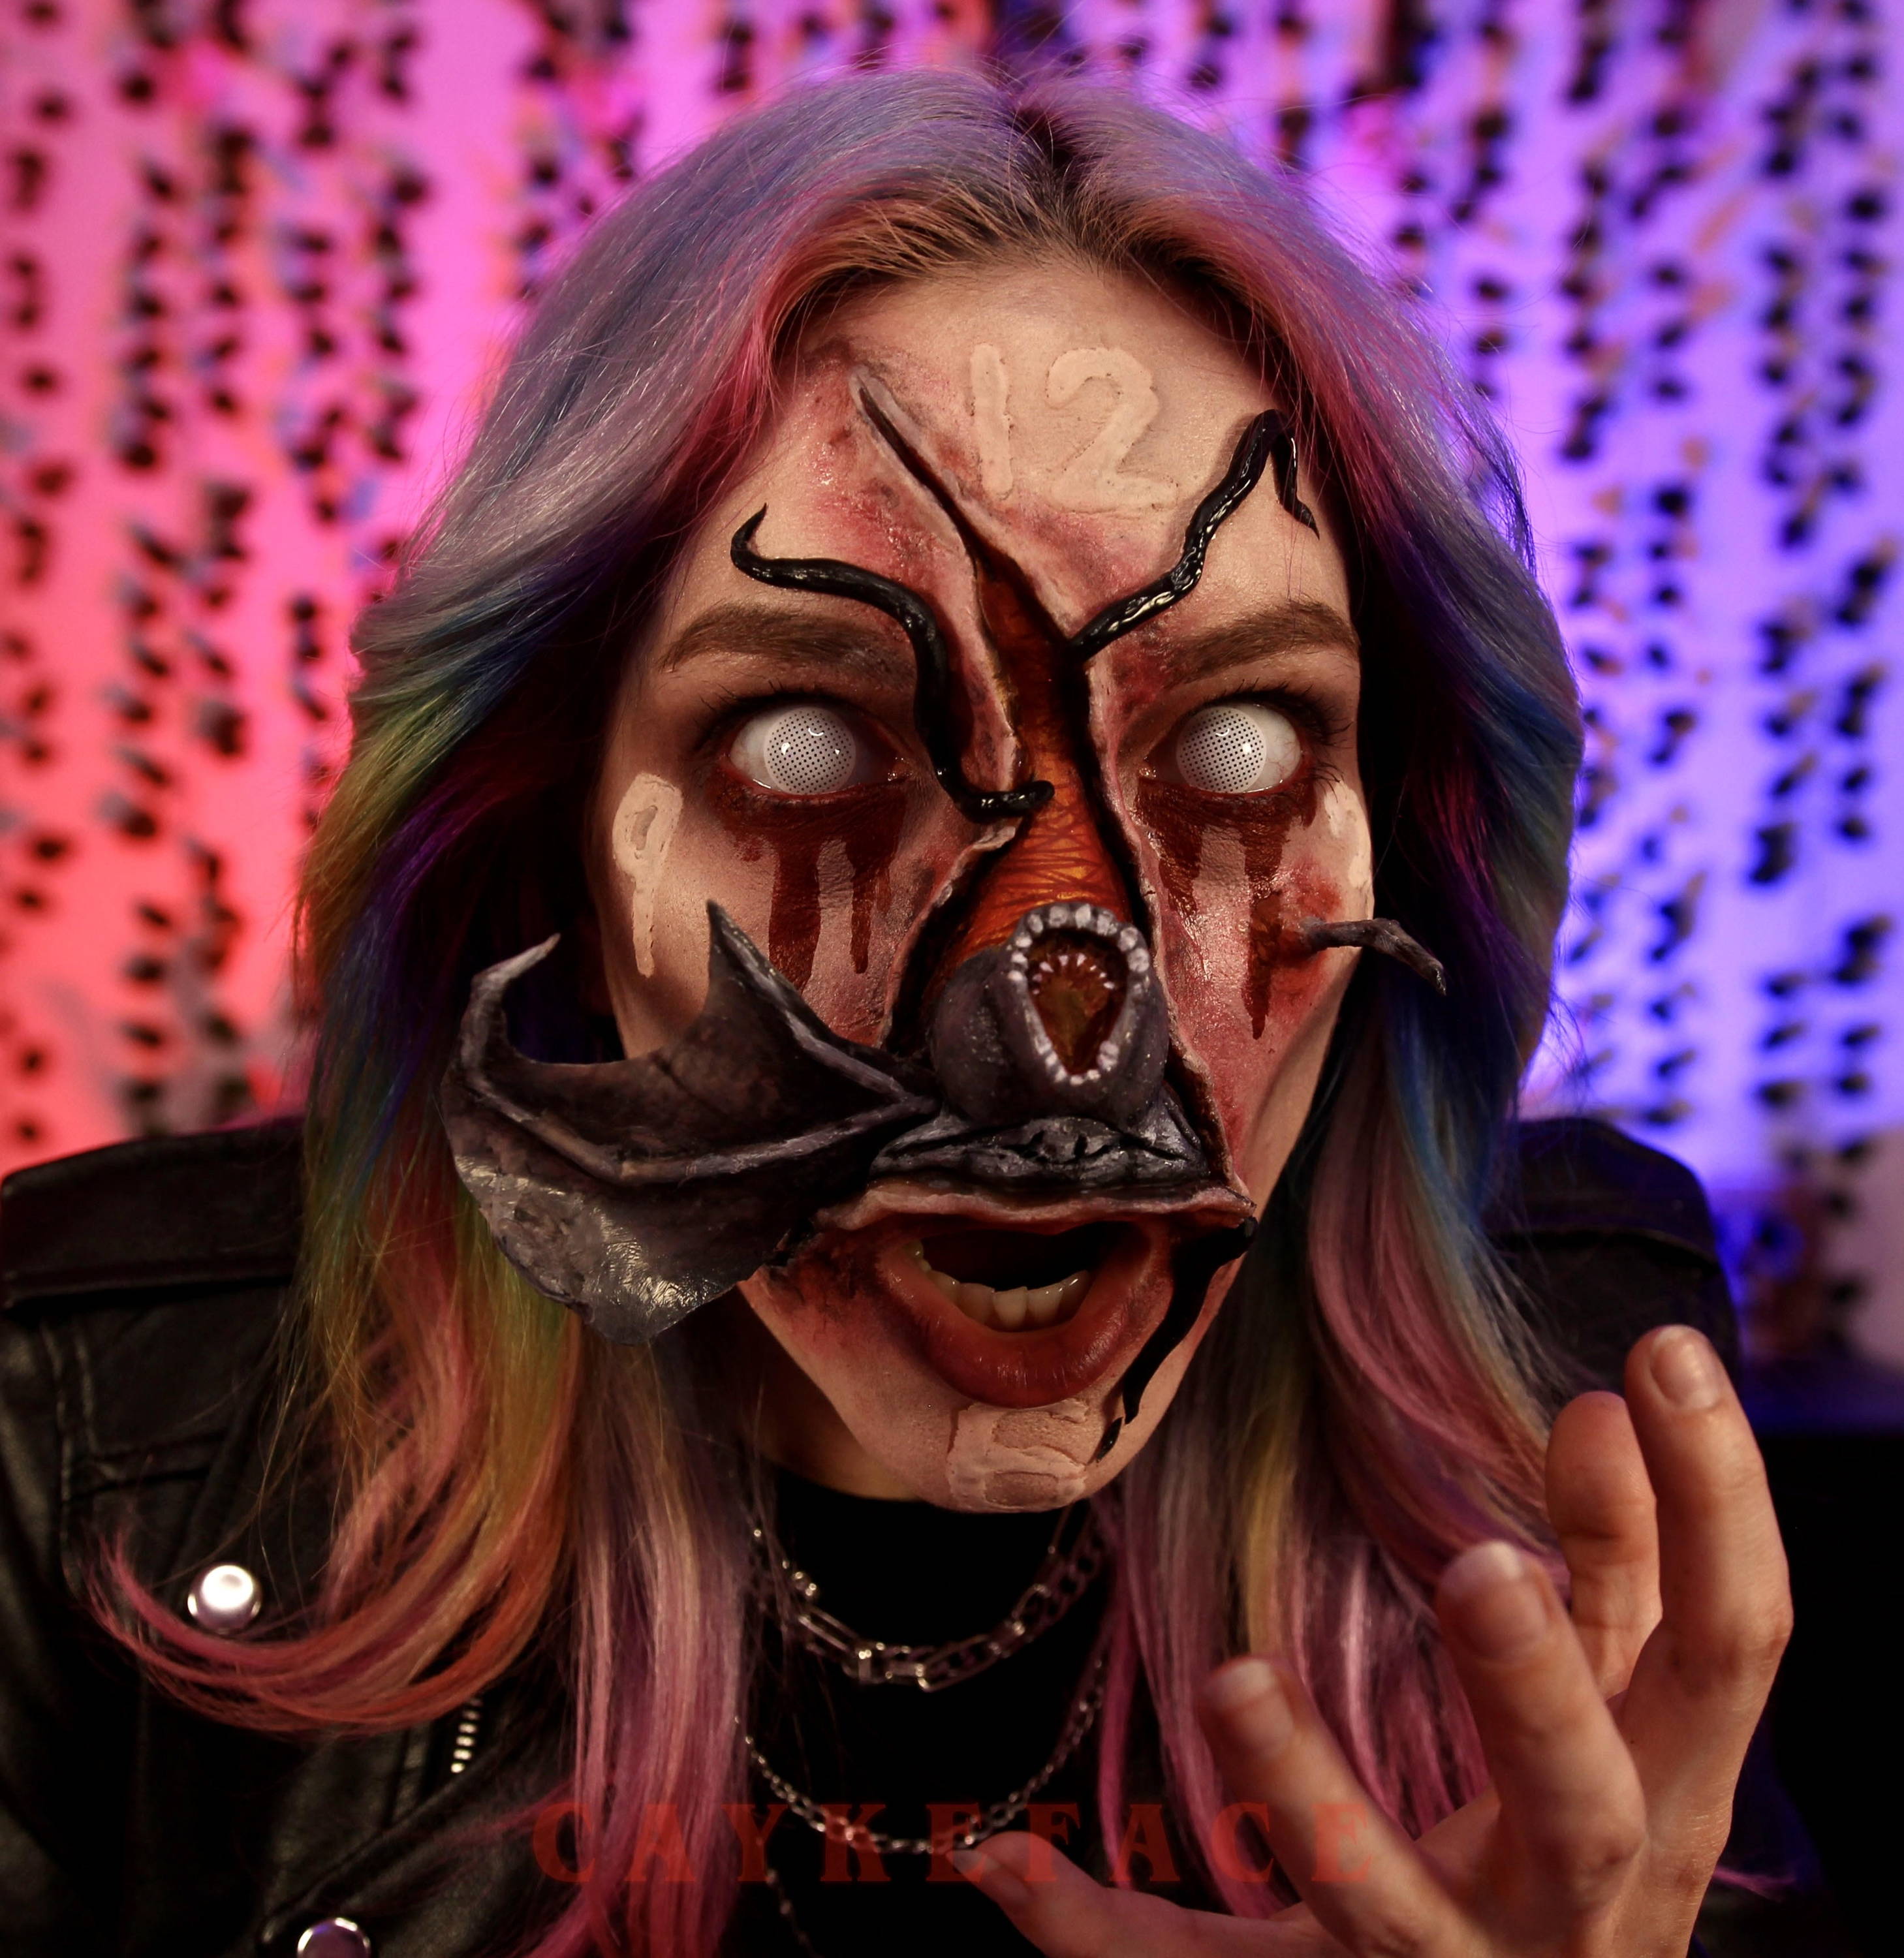 Barb Stranger Things inspired Halloween Makeup tutorial 